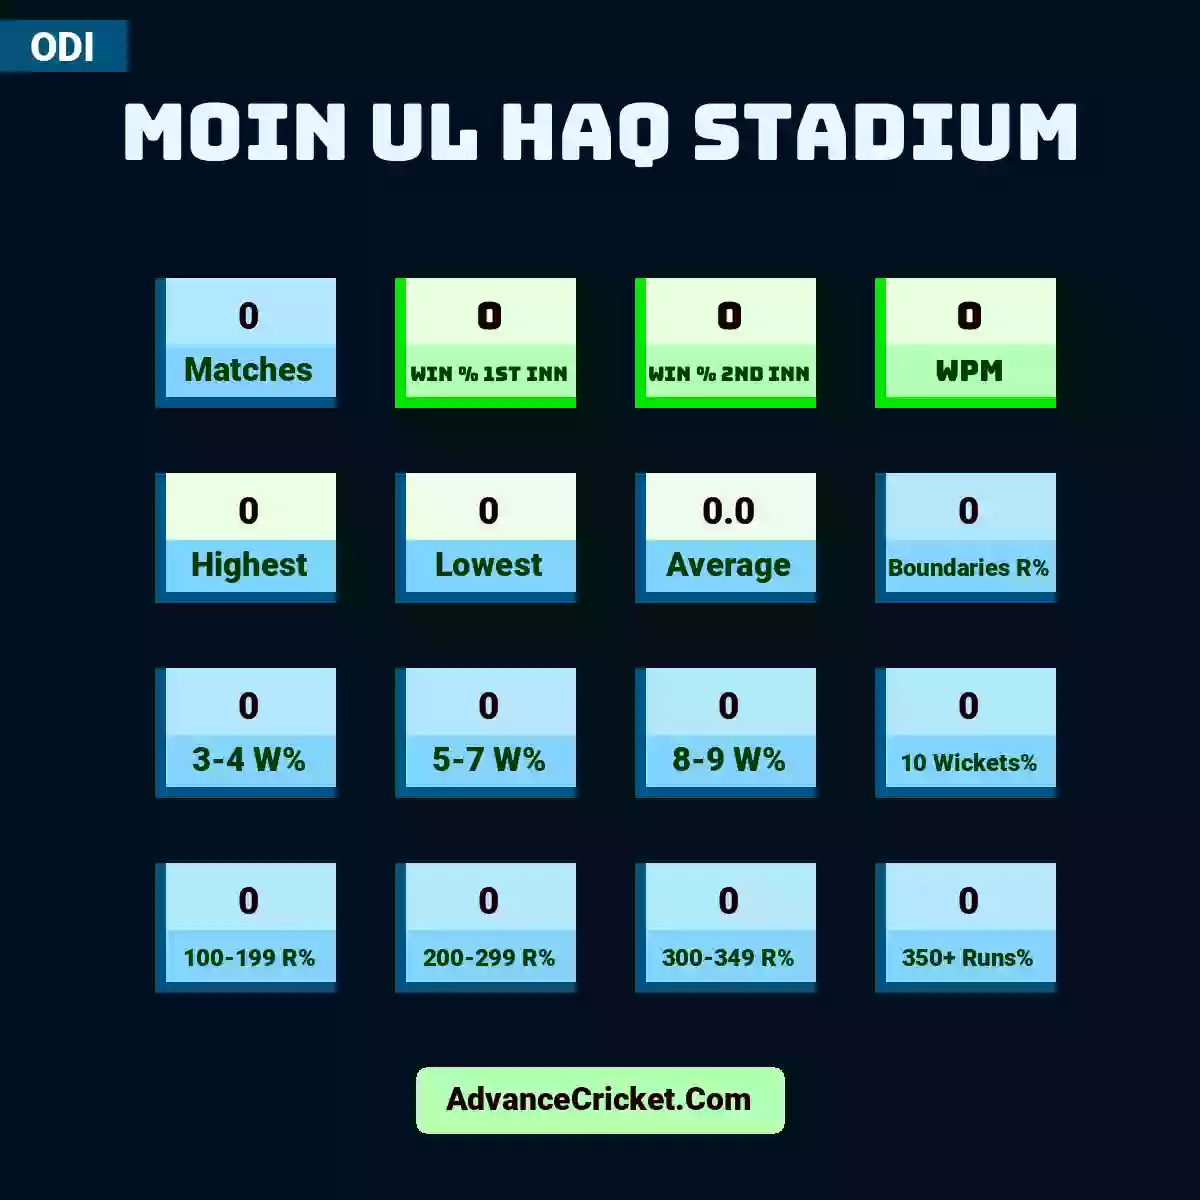 Image showing Moin ul Haq Stadium with Matches: 0, Win % 1st Inn: 0, Win % 2nd Inn: 0, WPM: 0, Highest: 0, Lowest: 0, Average: 0.0, Boundaries R%: 0, 3-4 W%: 0, 5-7 W%: 0, 8-9 W%: 0, 10 Wickets%: 0, 100-199 R%: 0, 200-299 R%: 0, 300-349 R%: 0, 350+ Runs%: 0.